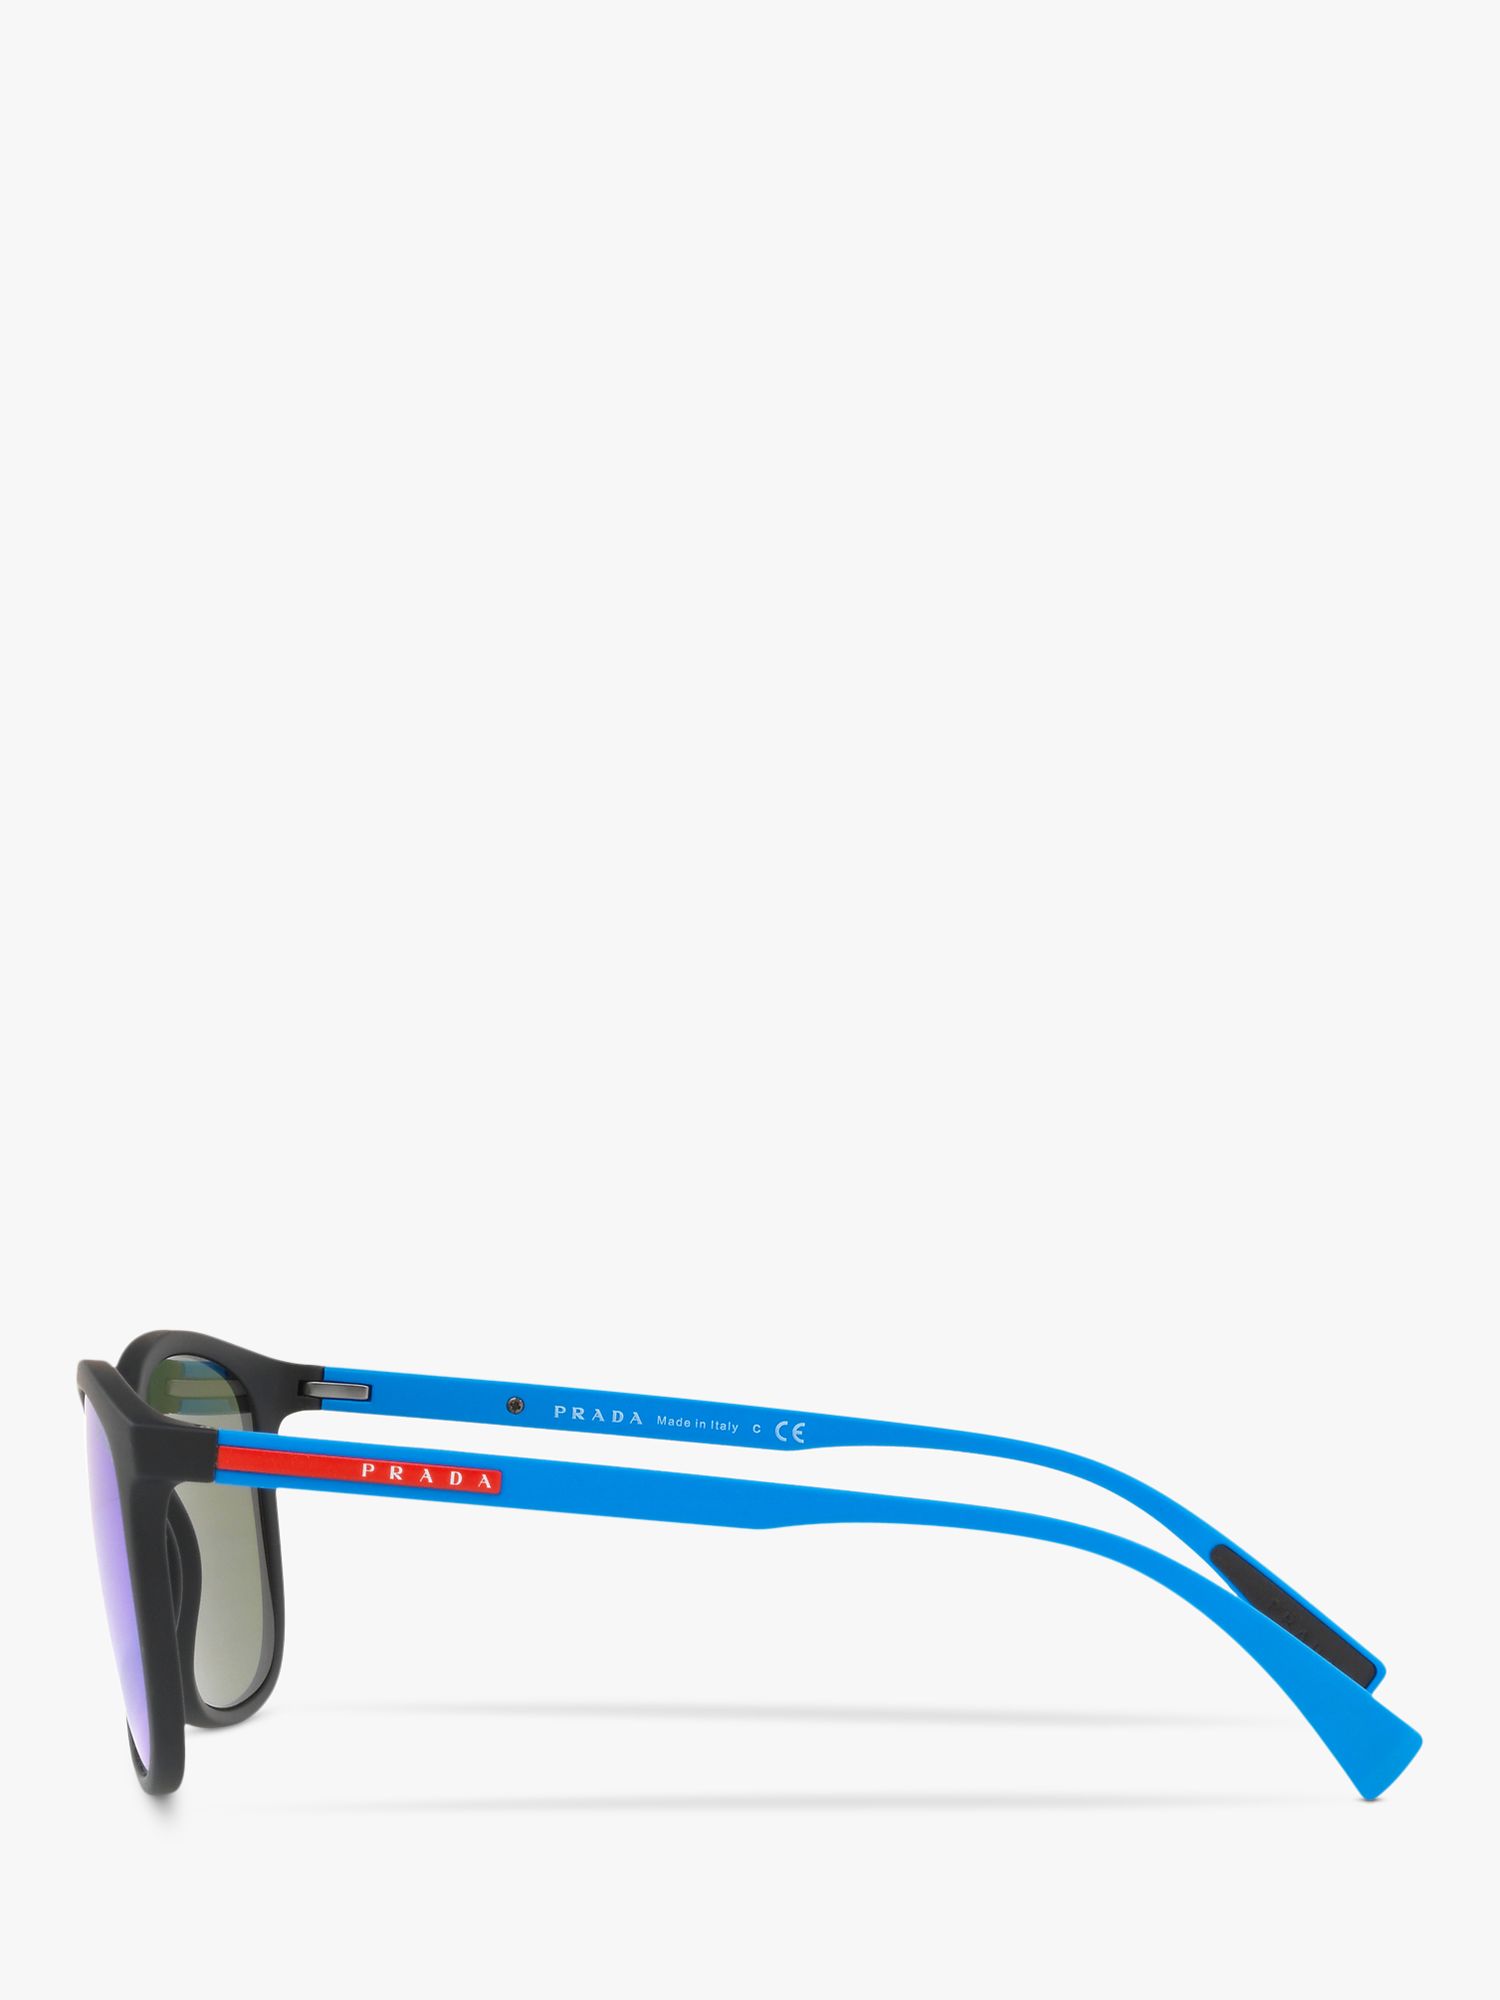 Prada Linea Rossa PS 01TS Men's Rectangular Sunglasses, Black Blue/Mirror  Turquoise